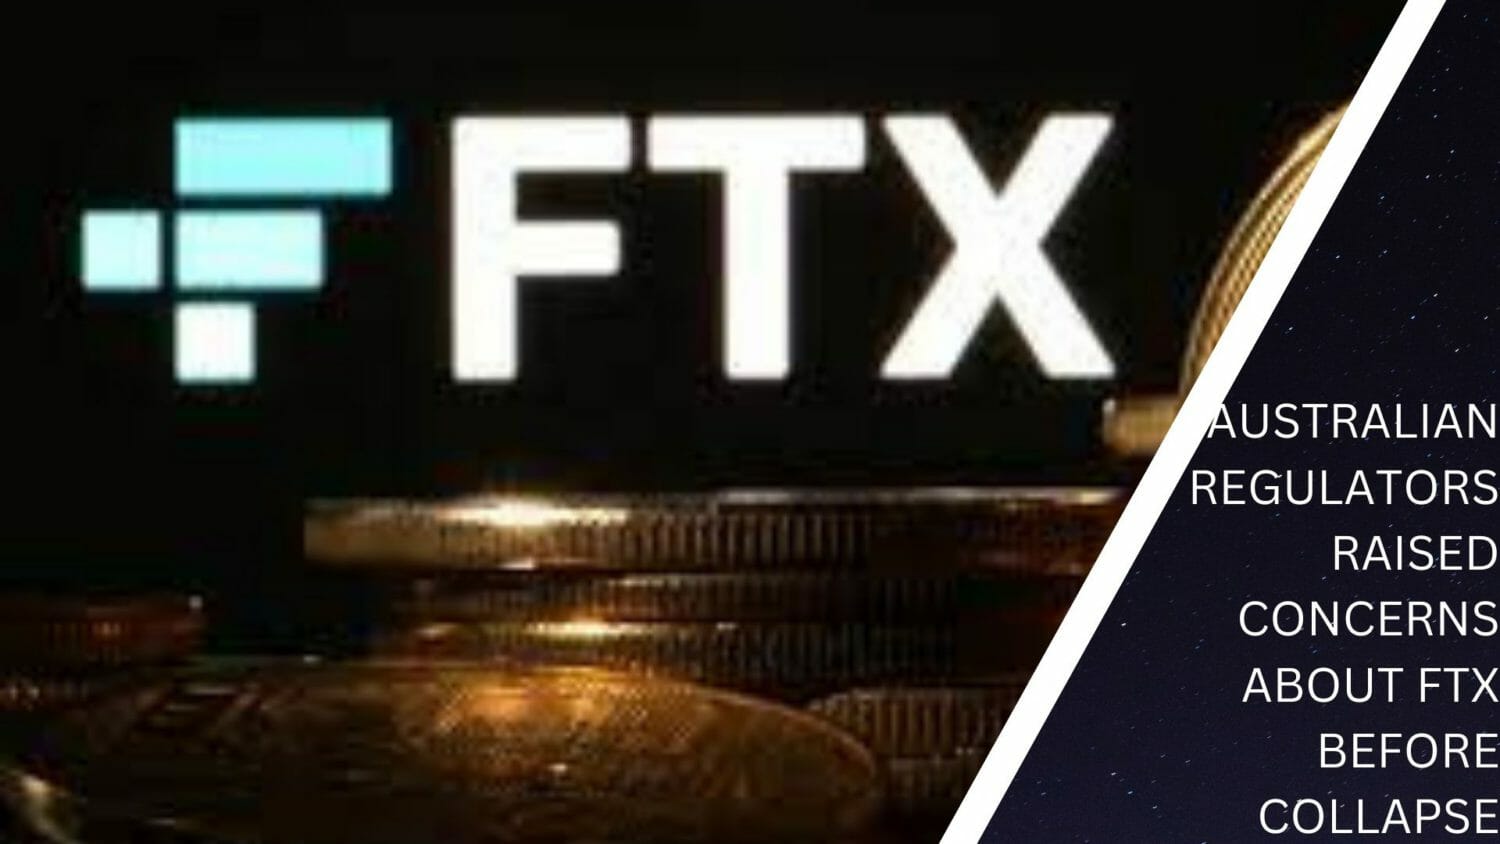 Australian Regulators Raised Concerns About Ftx Before Collapse